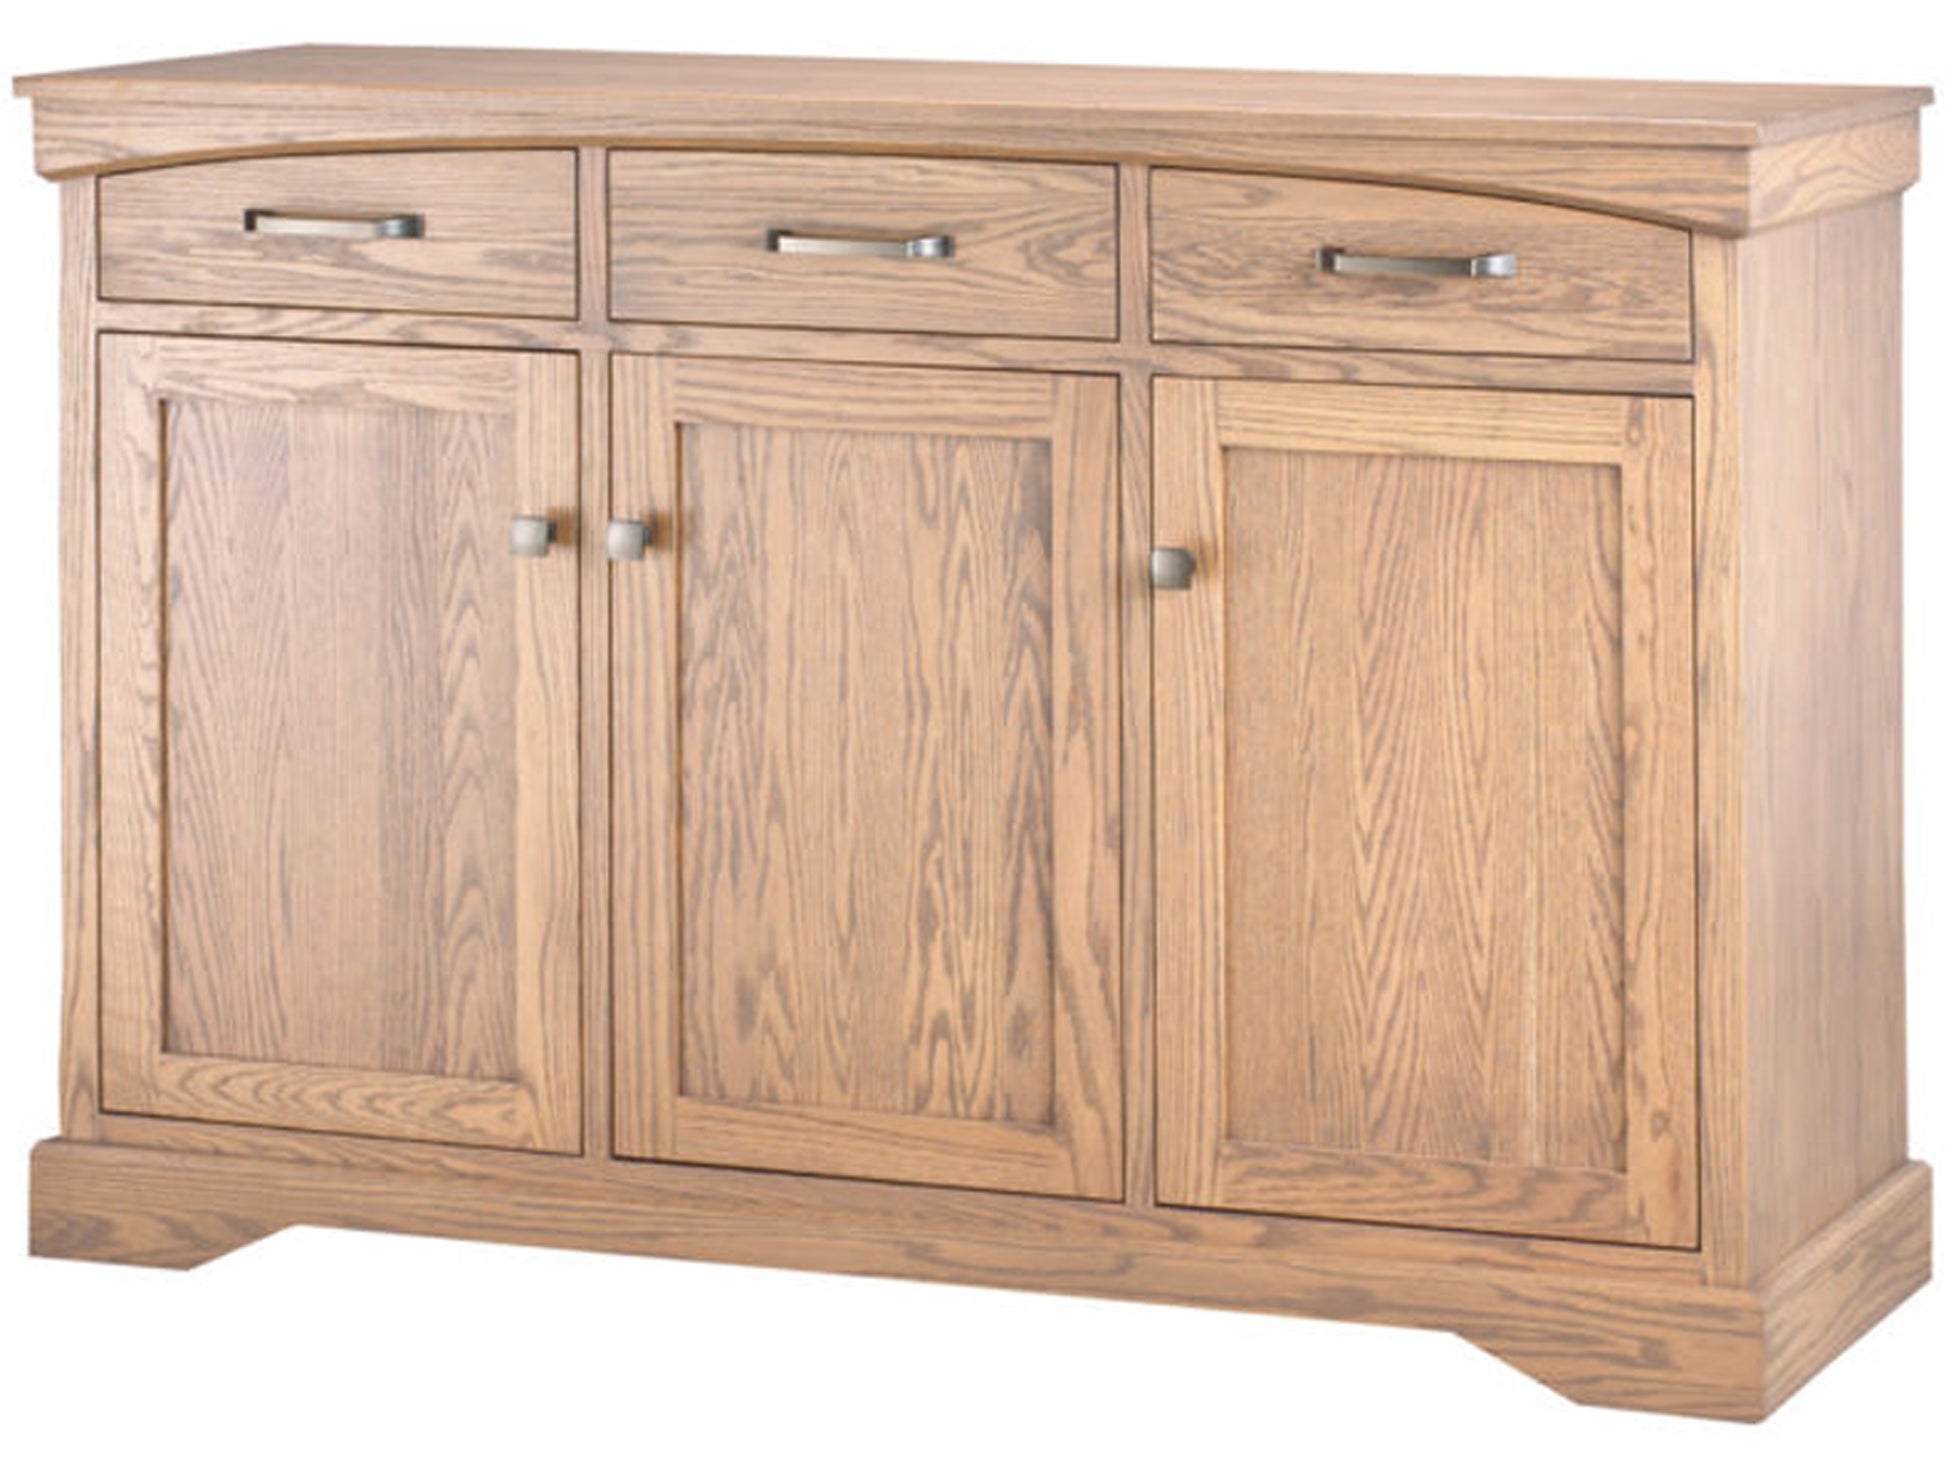 Ellis server - solid wood, Canadian made, custom made to order furniture|